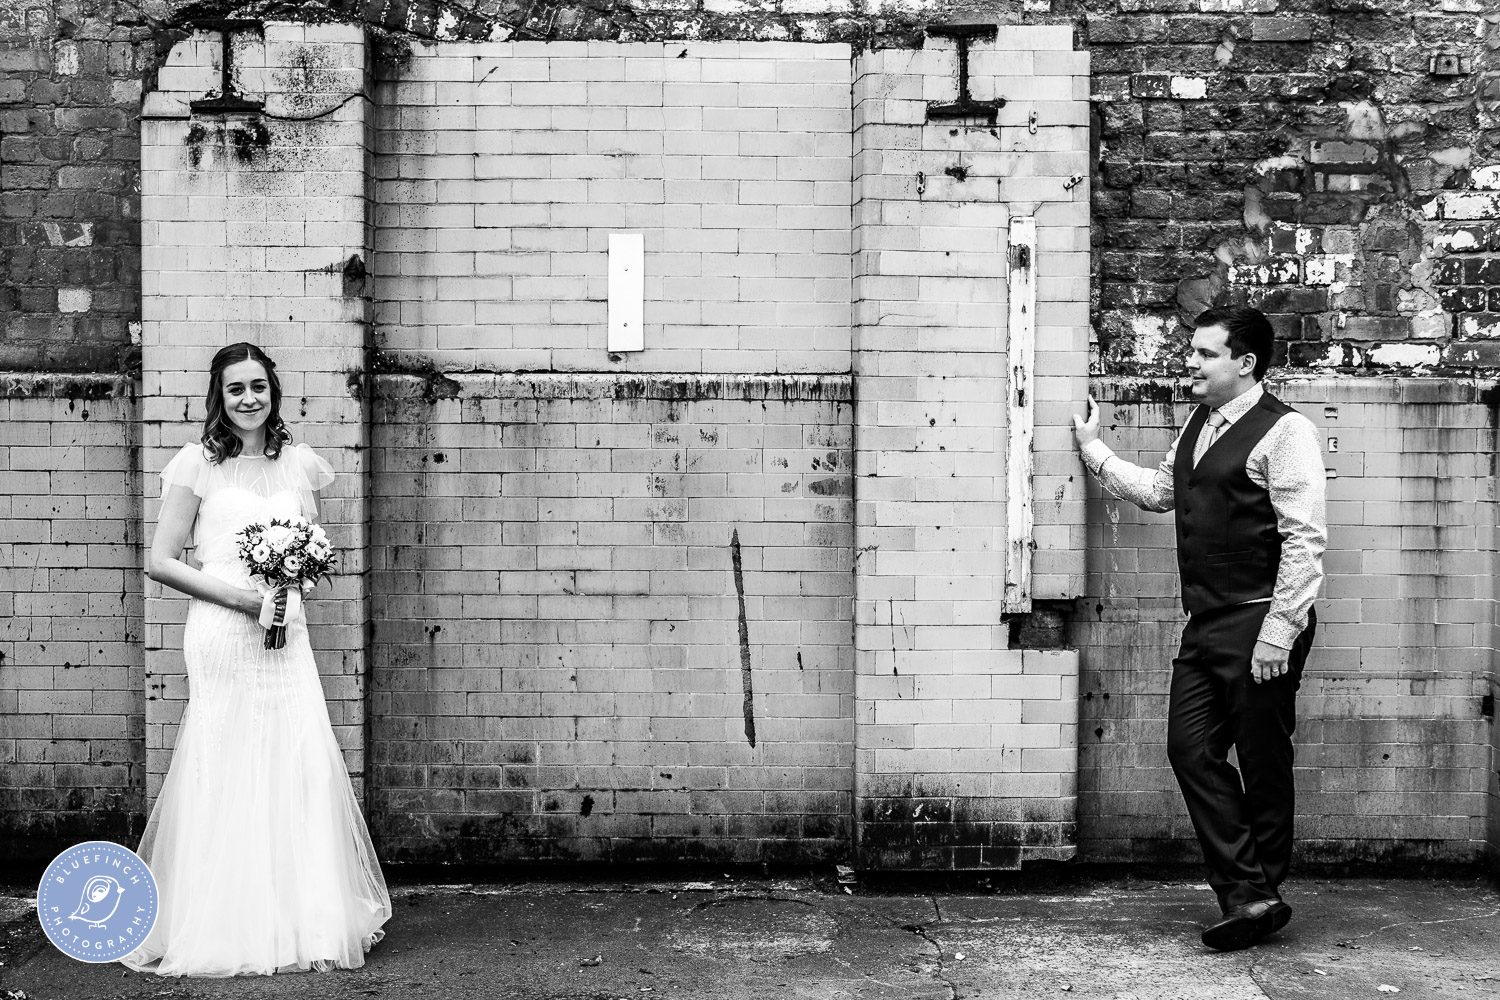 Daniel & Georgina’s Wedding Photography At The Bond Digbeth